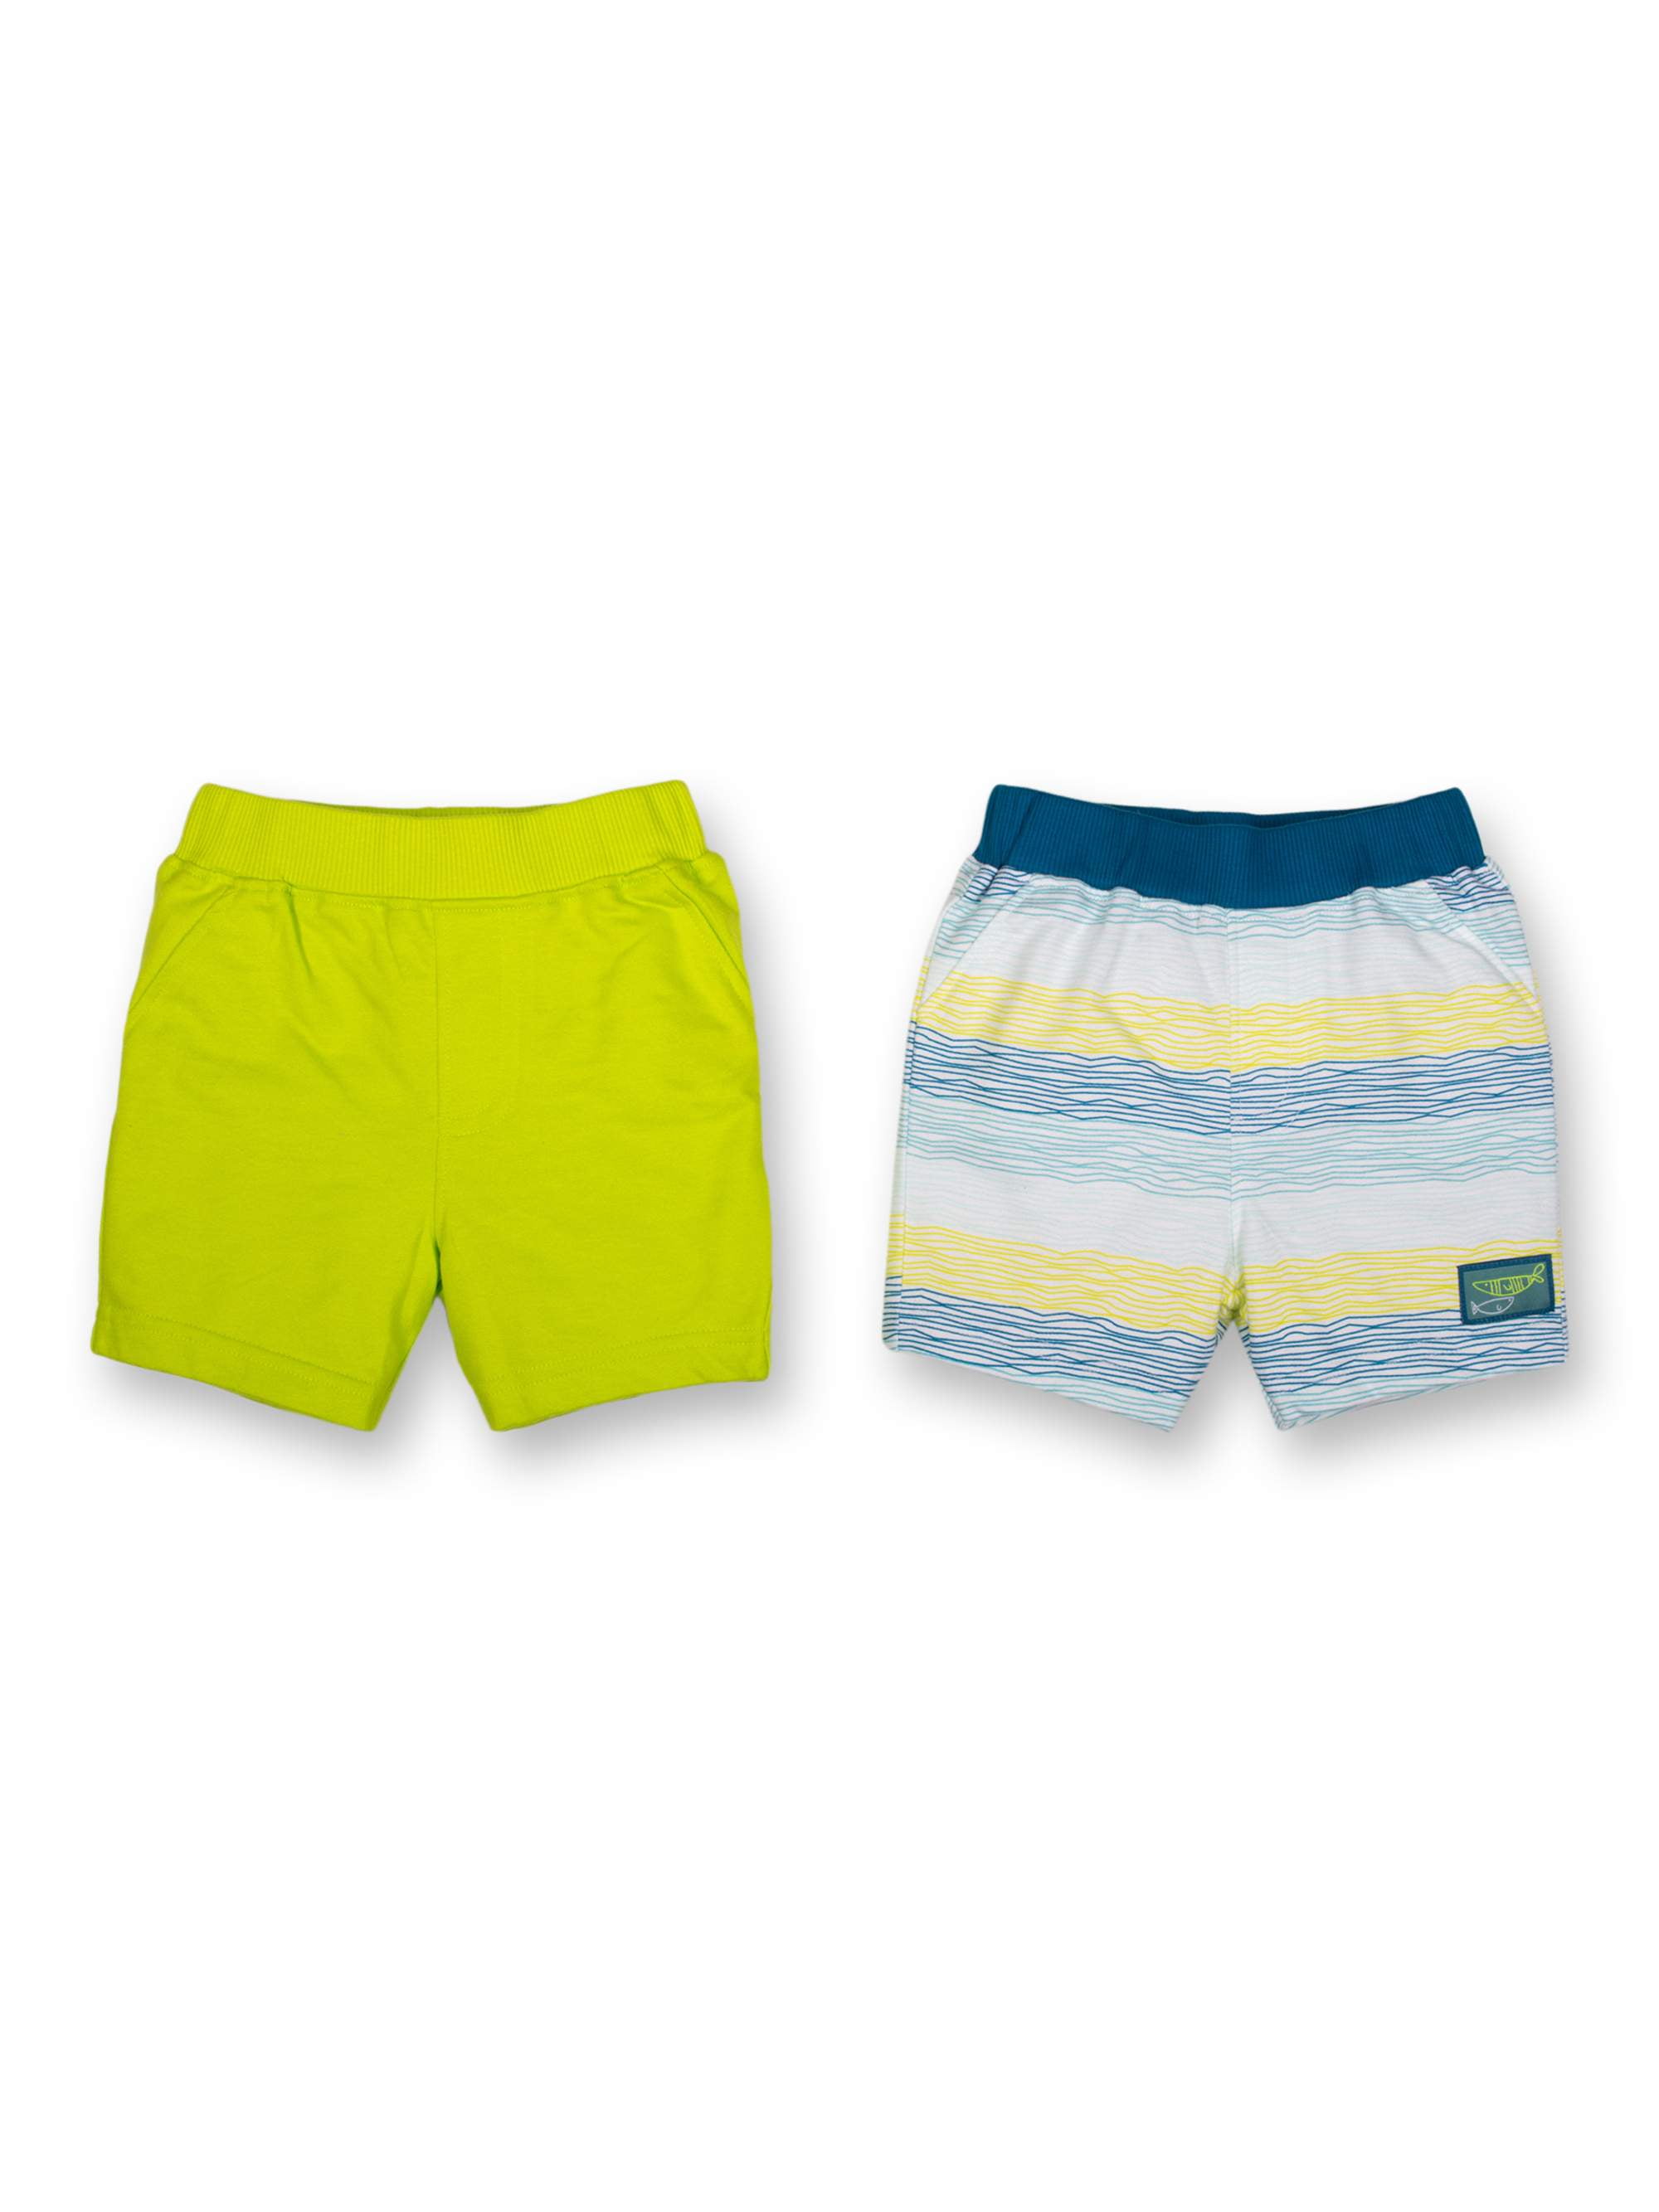 Shorts, 2pk (Baby Boys) - Walmart.com